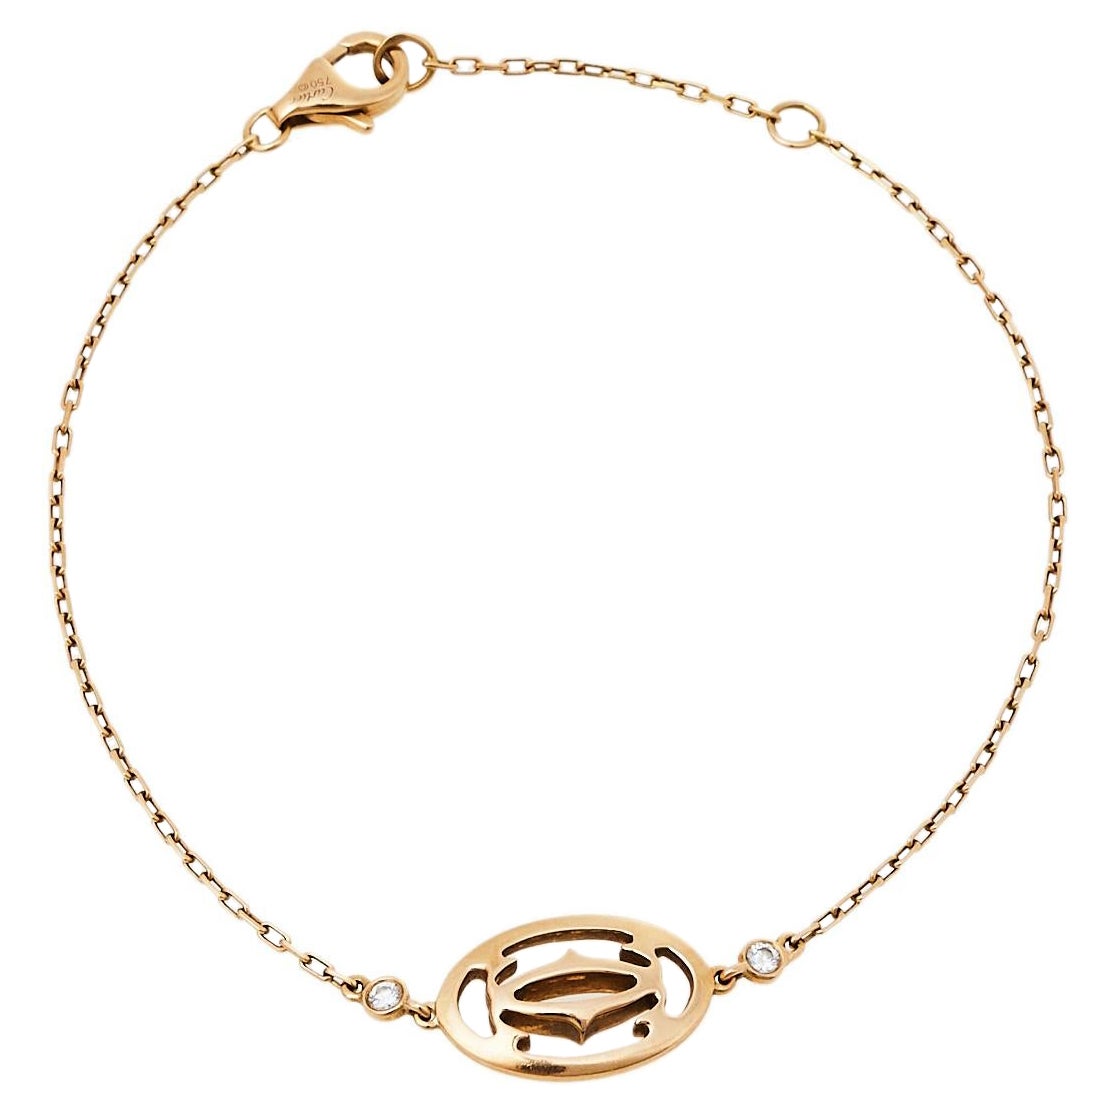 C De Cartier Bracelet - 15 For Sale on 1stDibs | ecrou de cartier bracelet  meaning